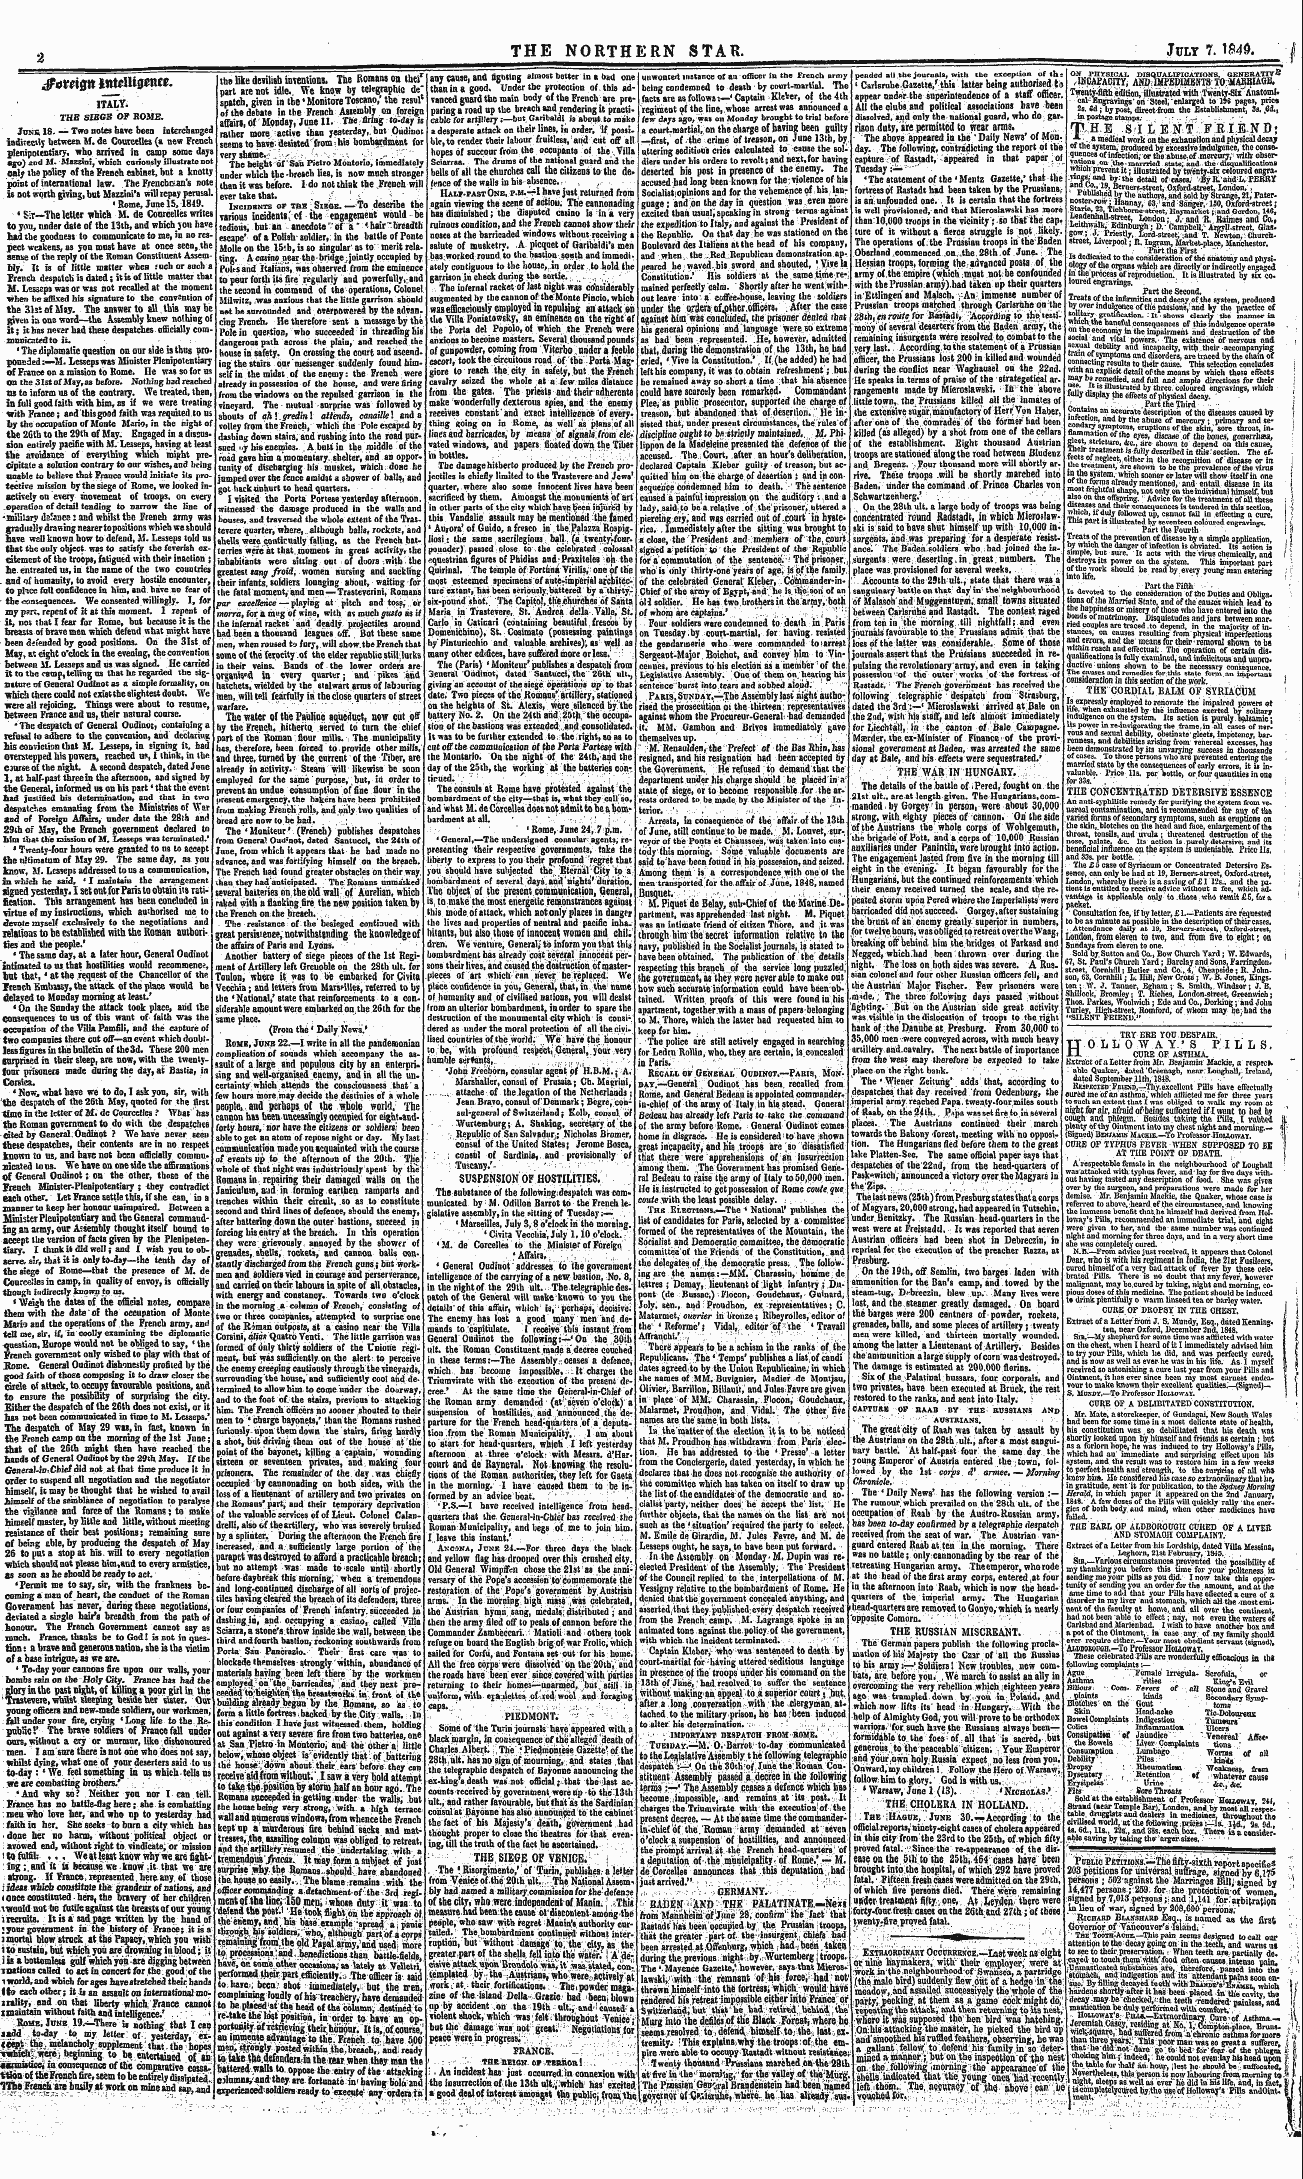 Northern Star (1837-1852): jS F Y, 3rd edition - Out Physrcax Drsdnamficatro-Ws. Generativb.Ikpaeacity, Aot)|Impbppibnt8;T0;'Marriac1b,